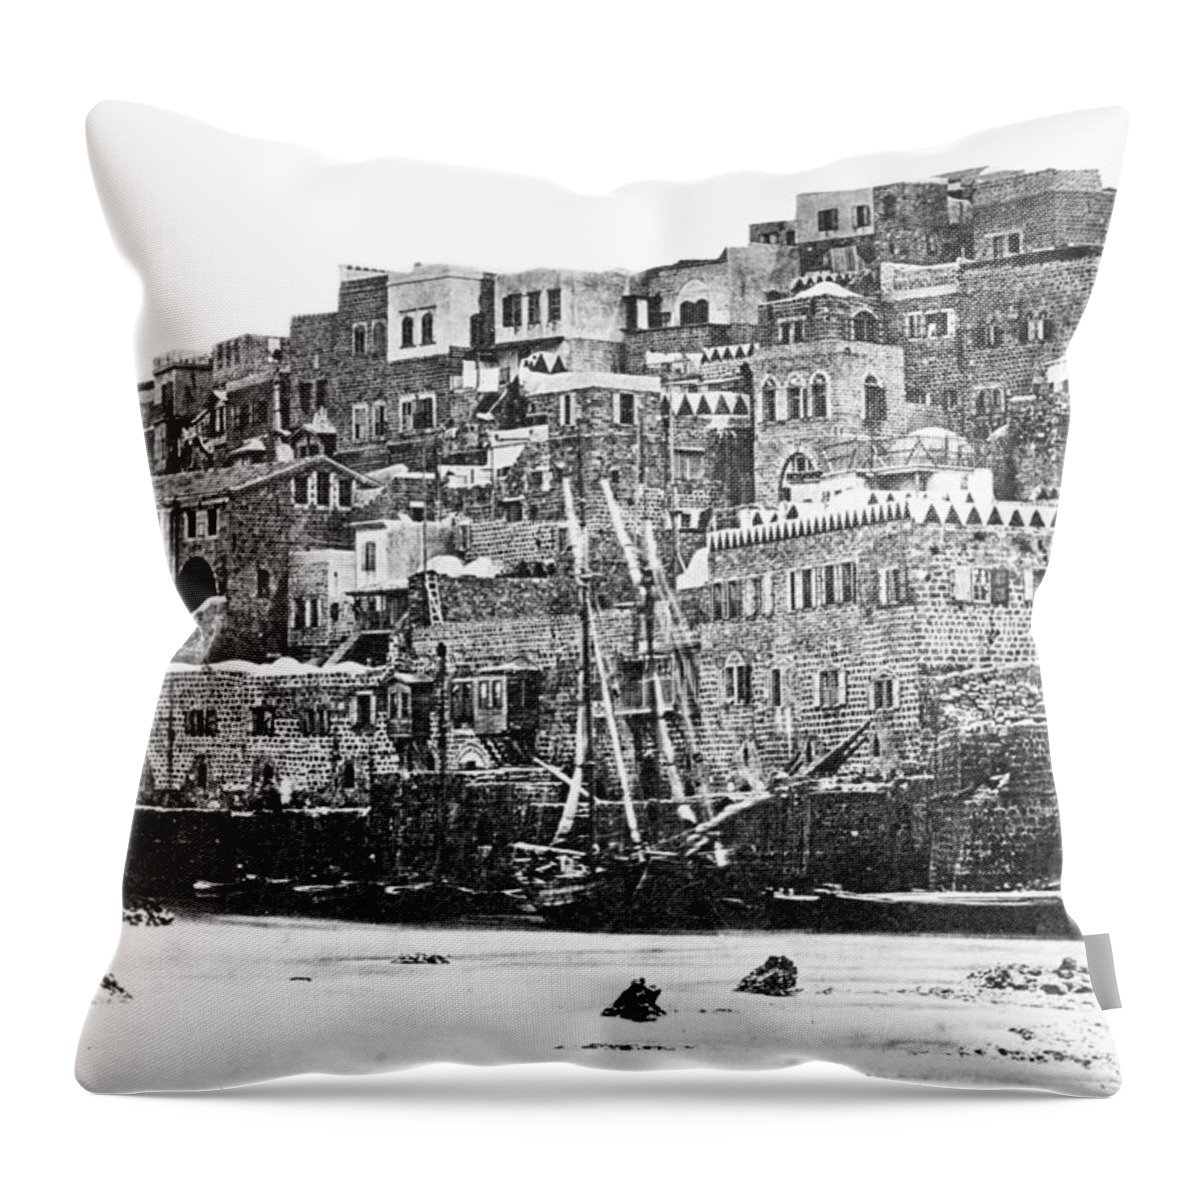 Jaffa Throw Pillow featuring the photograph Jaffa 1886 by Munir Alawi